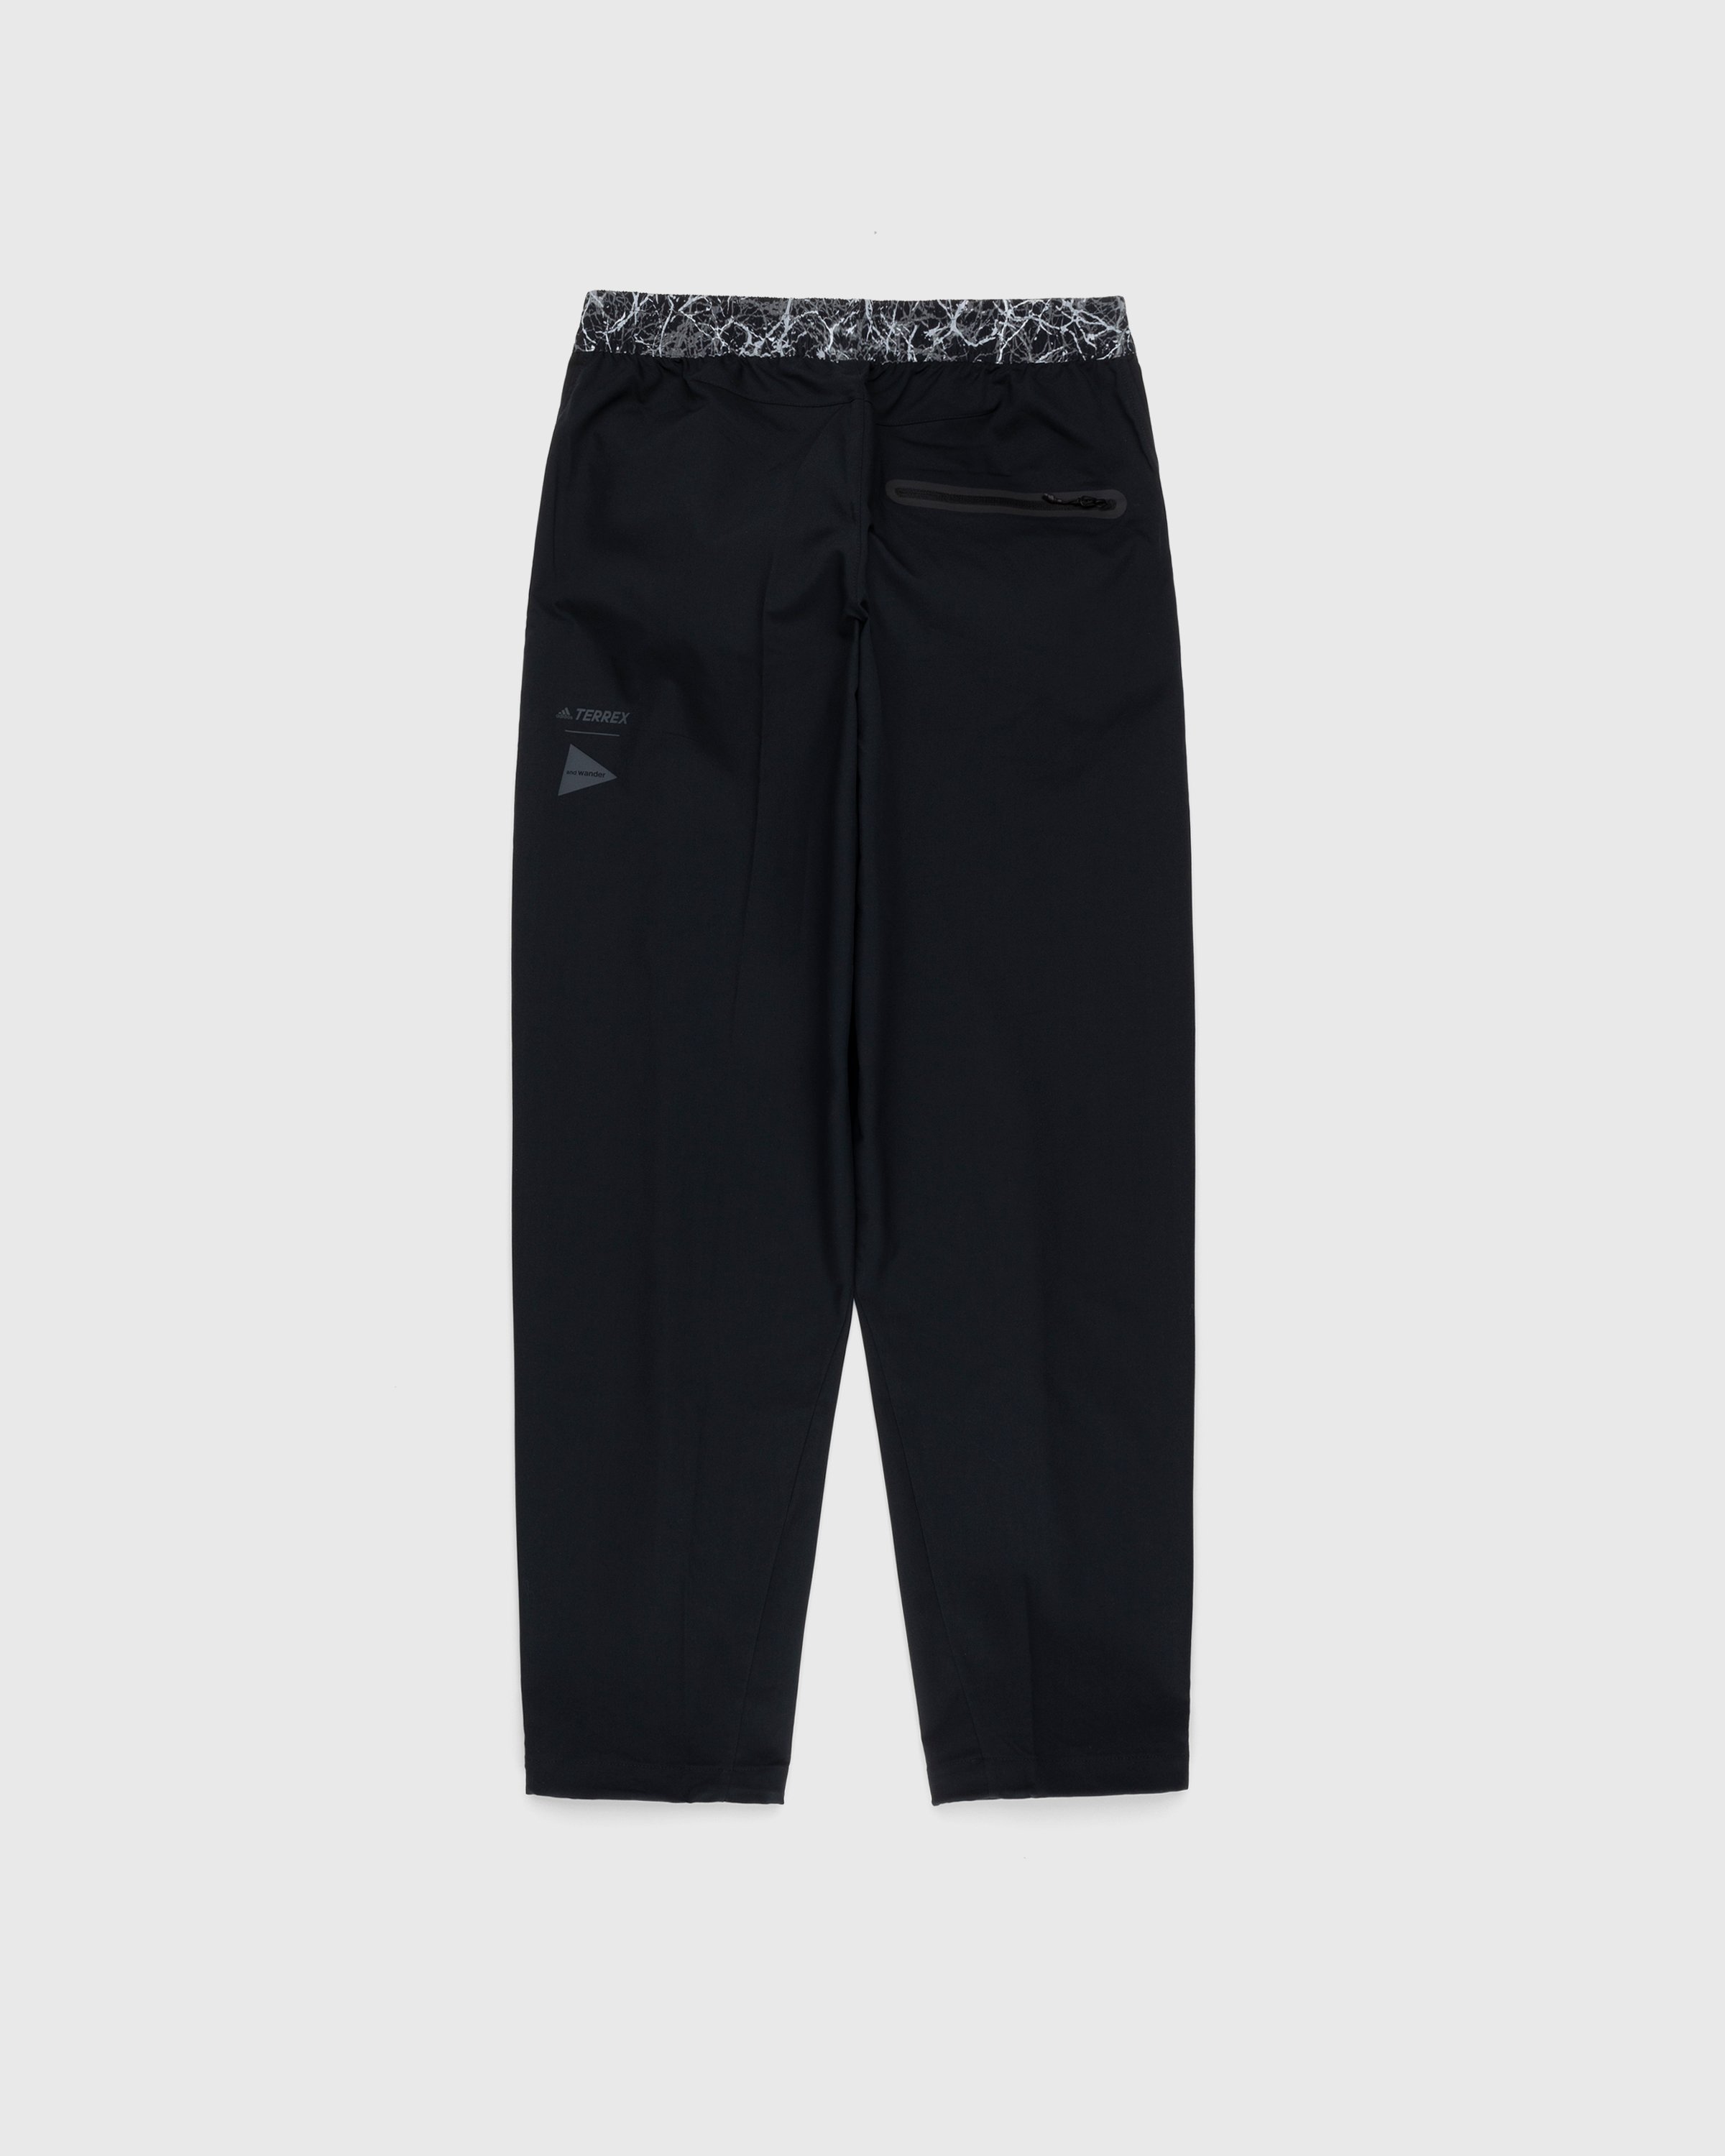 Adidas x And Wander - TERREX Hiking Pants Black - Clothing - Black - Image 2